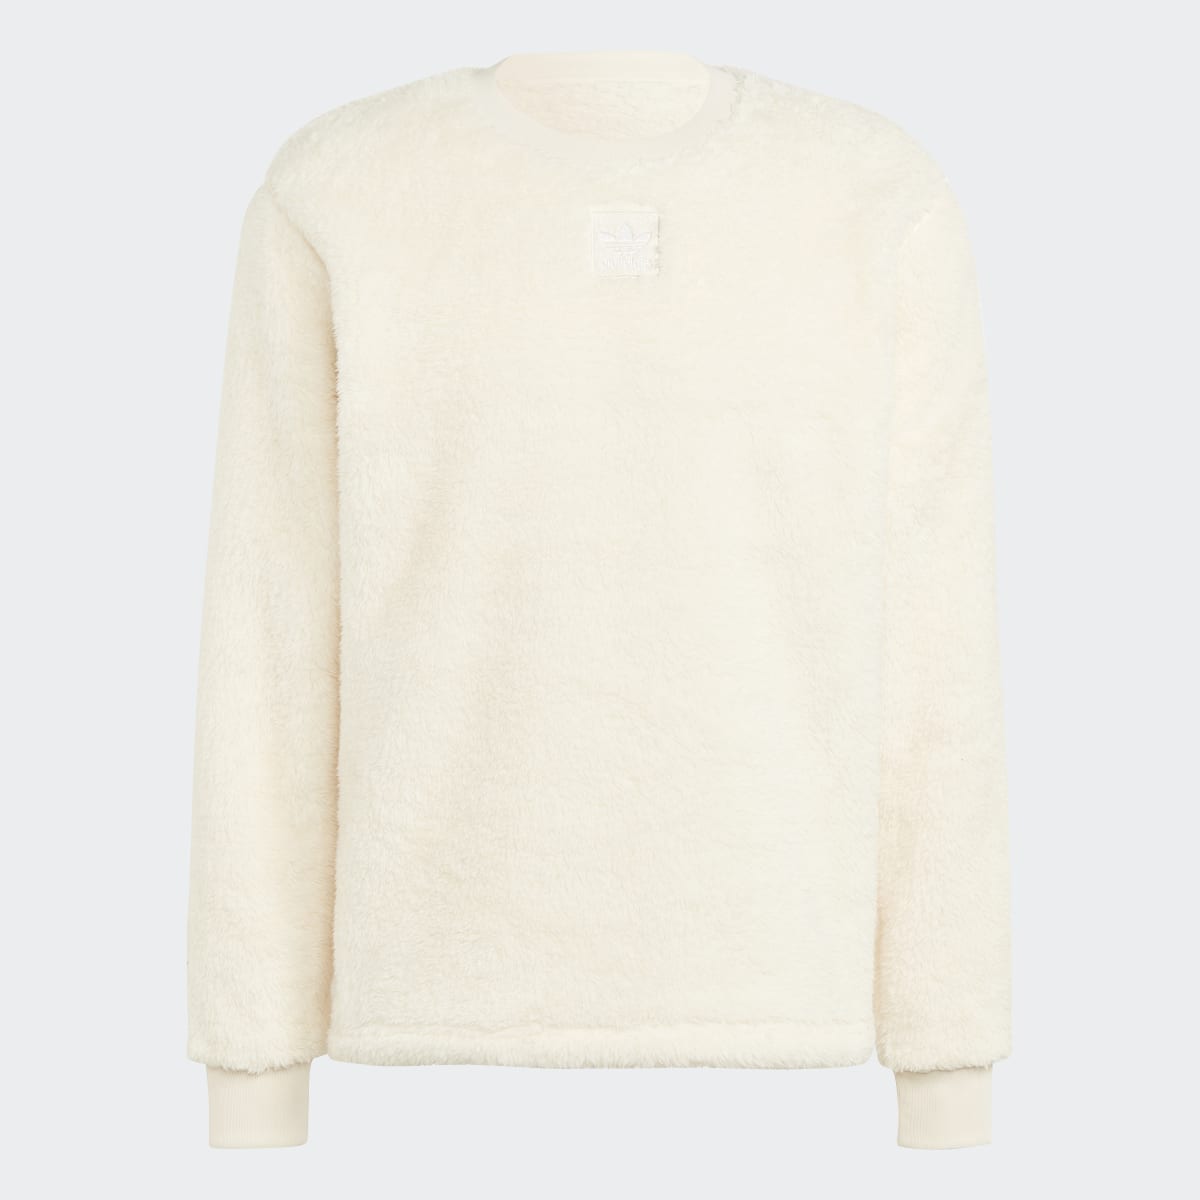 Adidas Sweatshirt em Fleece Felpudo Essentials+. 6